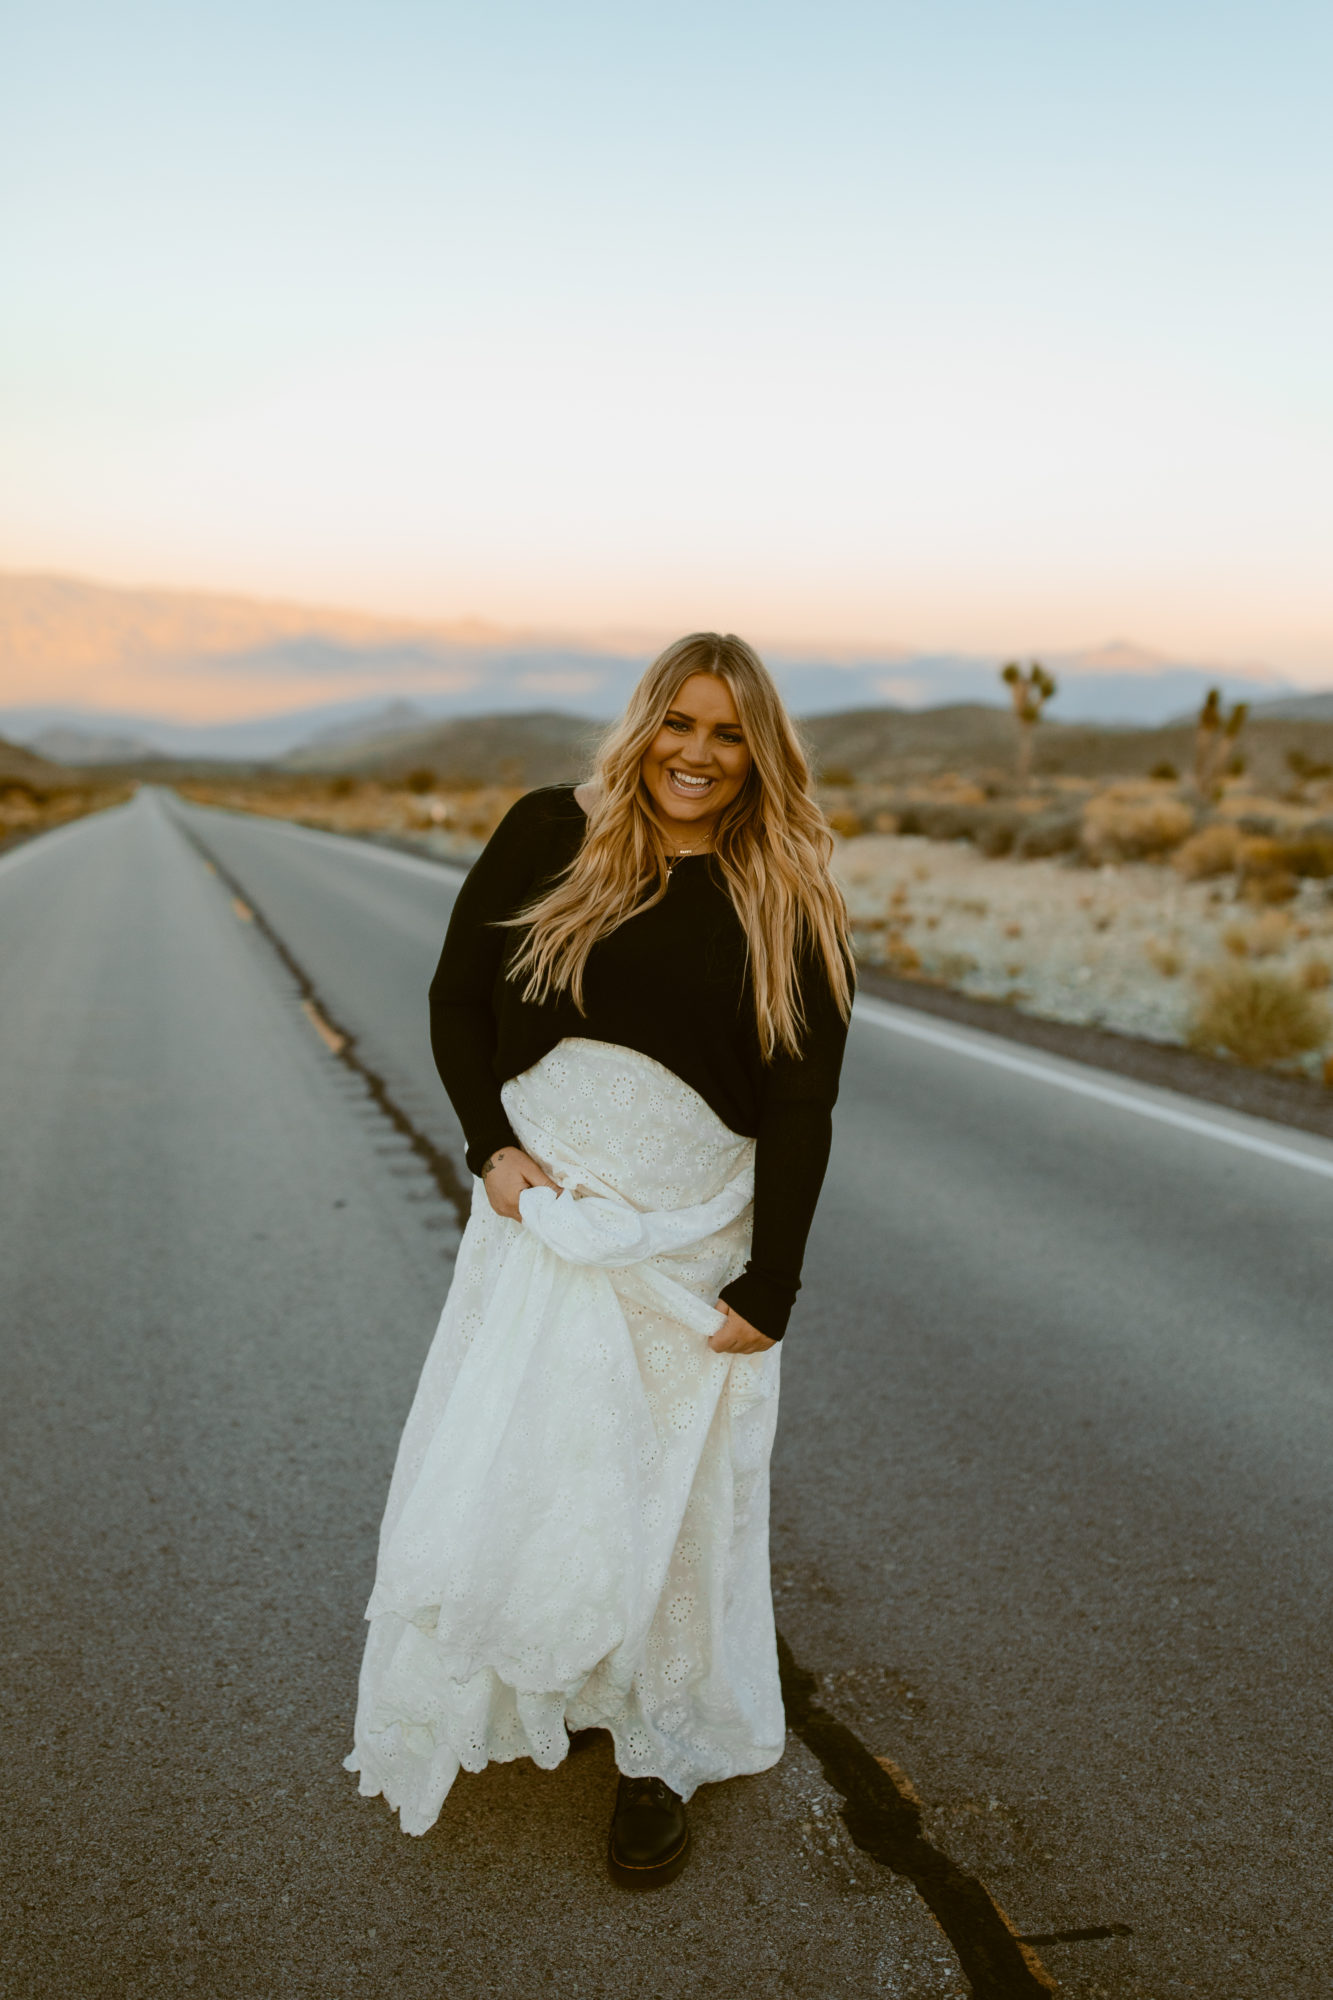 Woman smiling for desert photoshoot